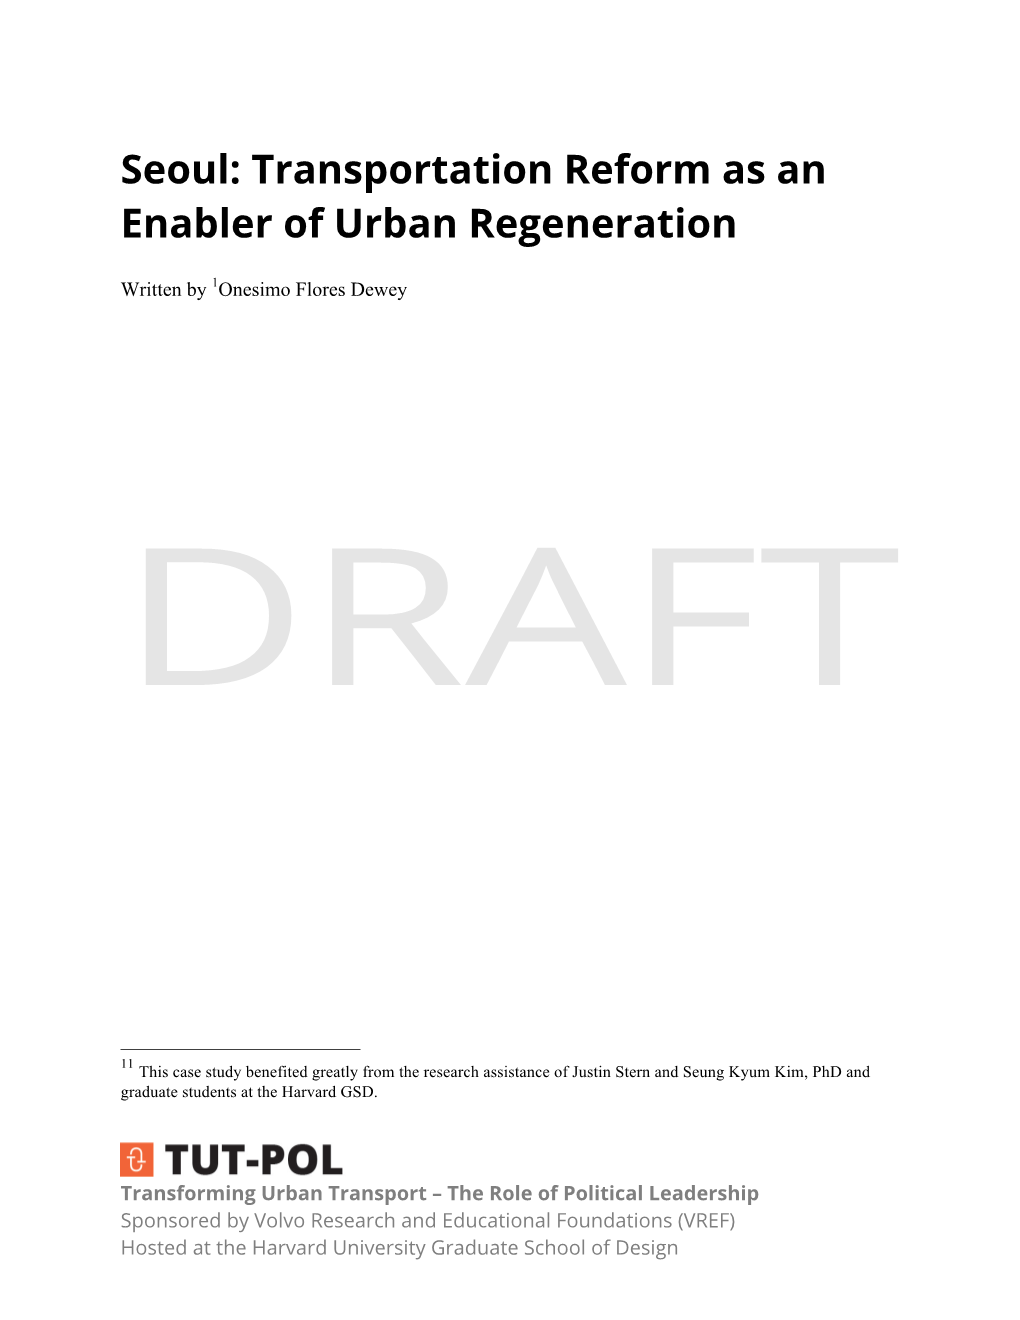 Seoul: Transportation Reform As an Enabler of Urban Regeneration